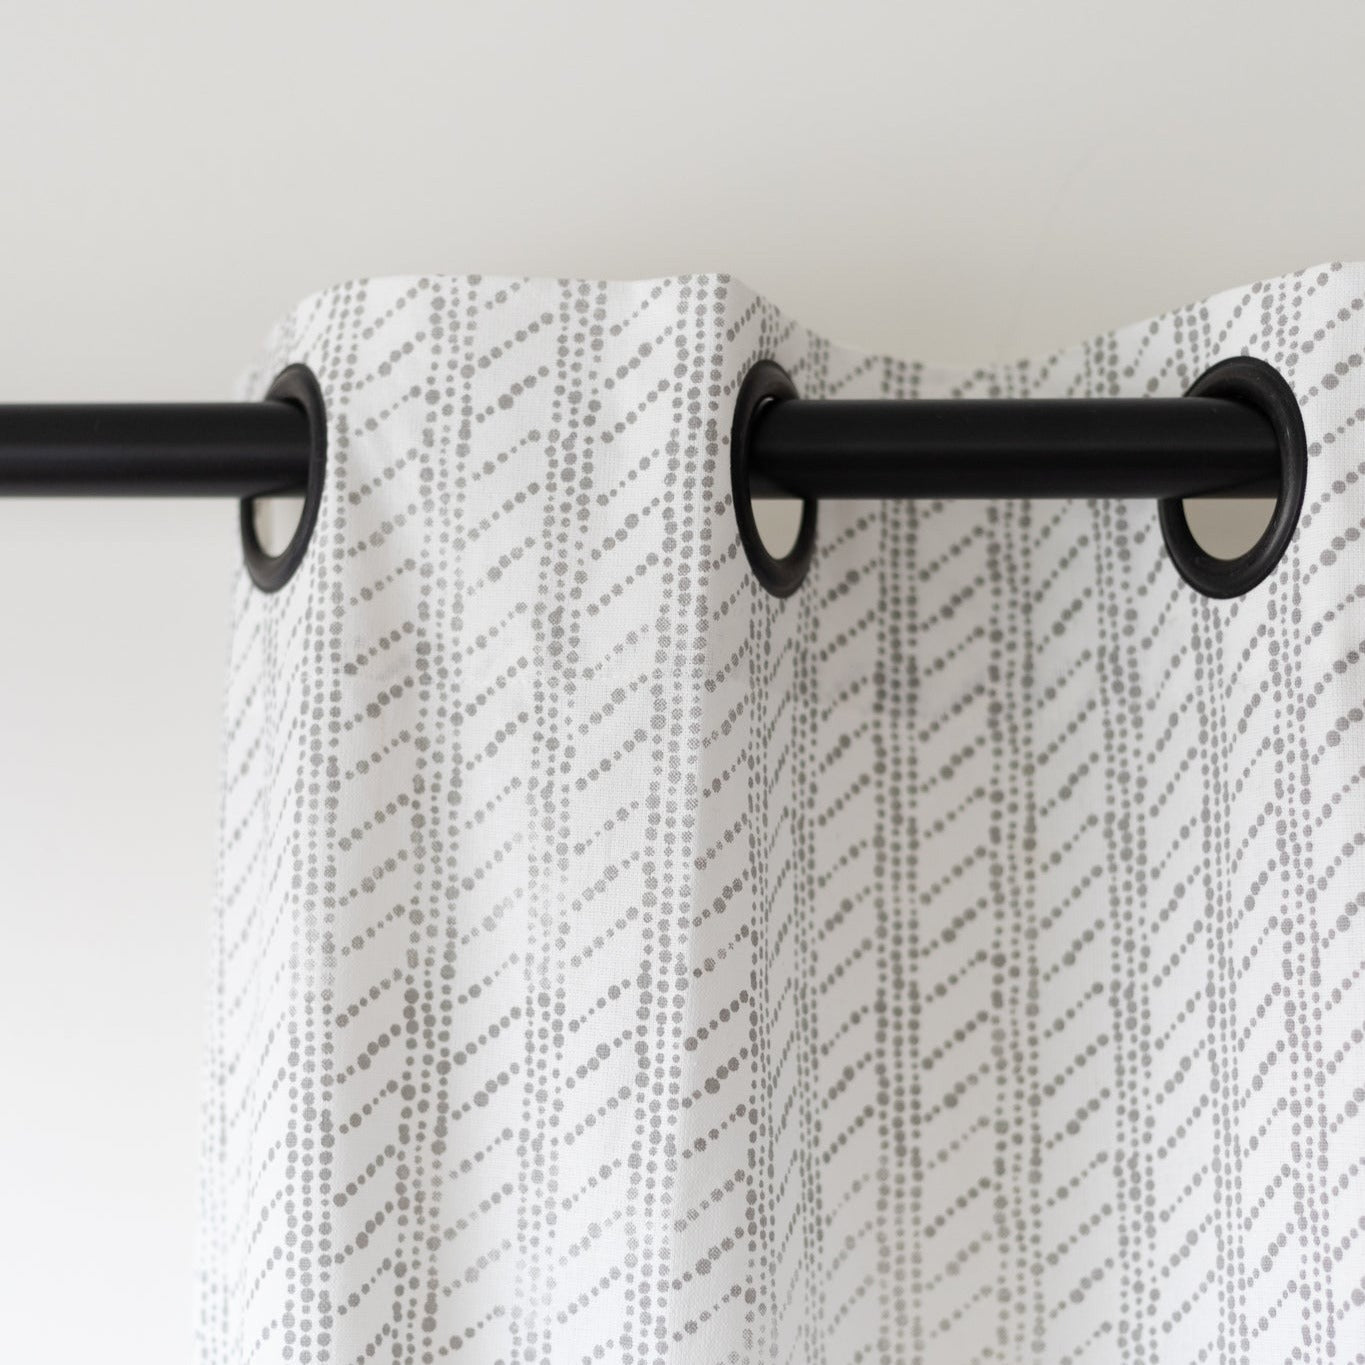 Idyl - Shower Curtain – Woven Nook